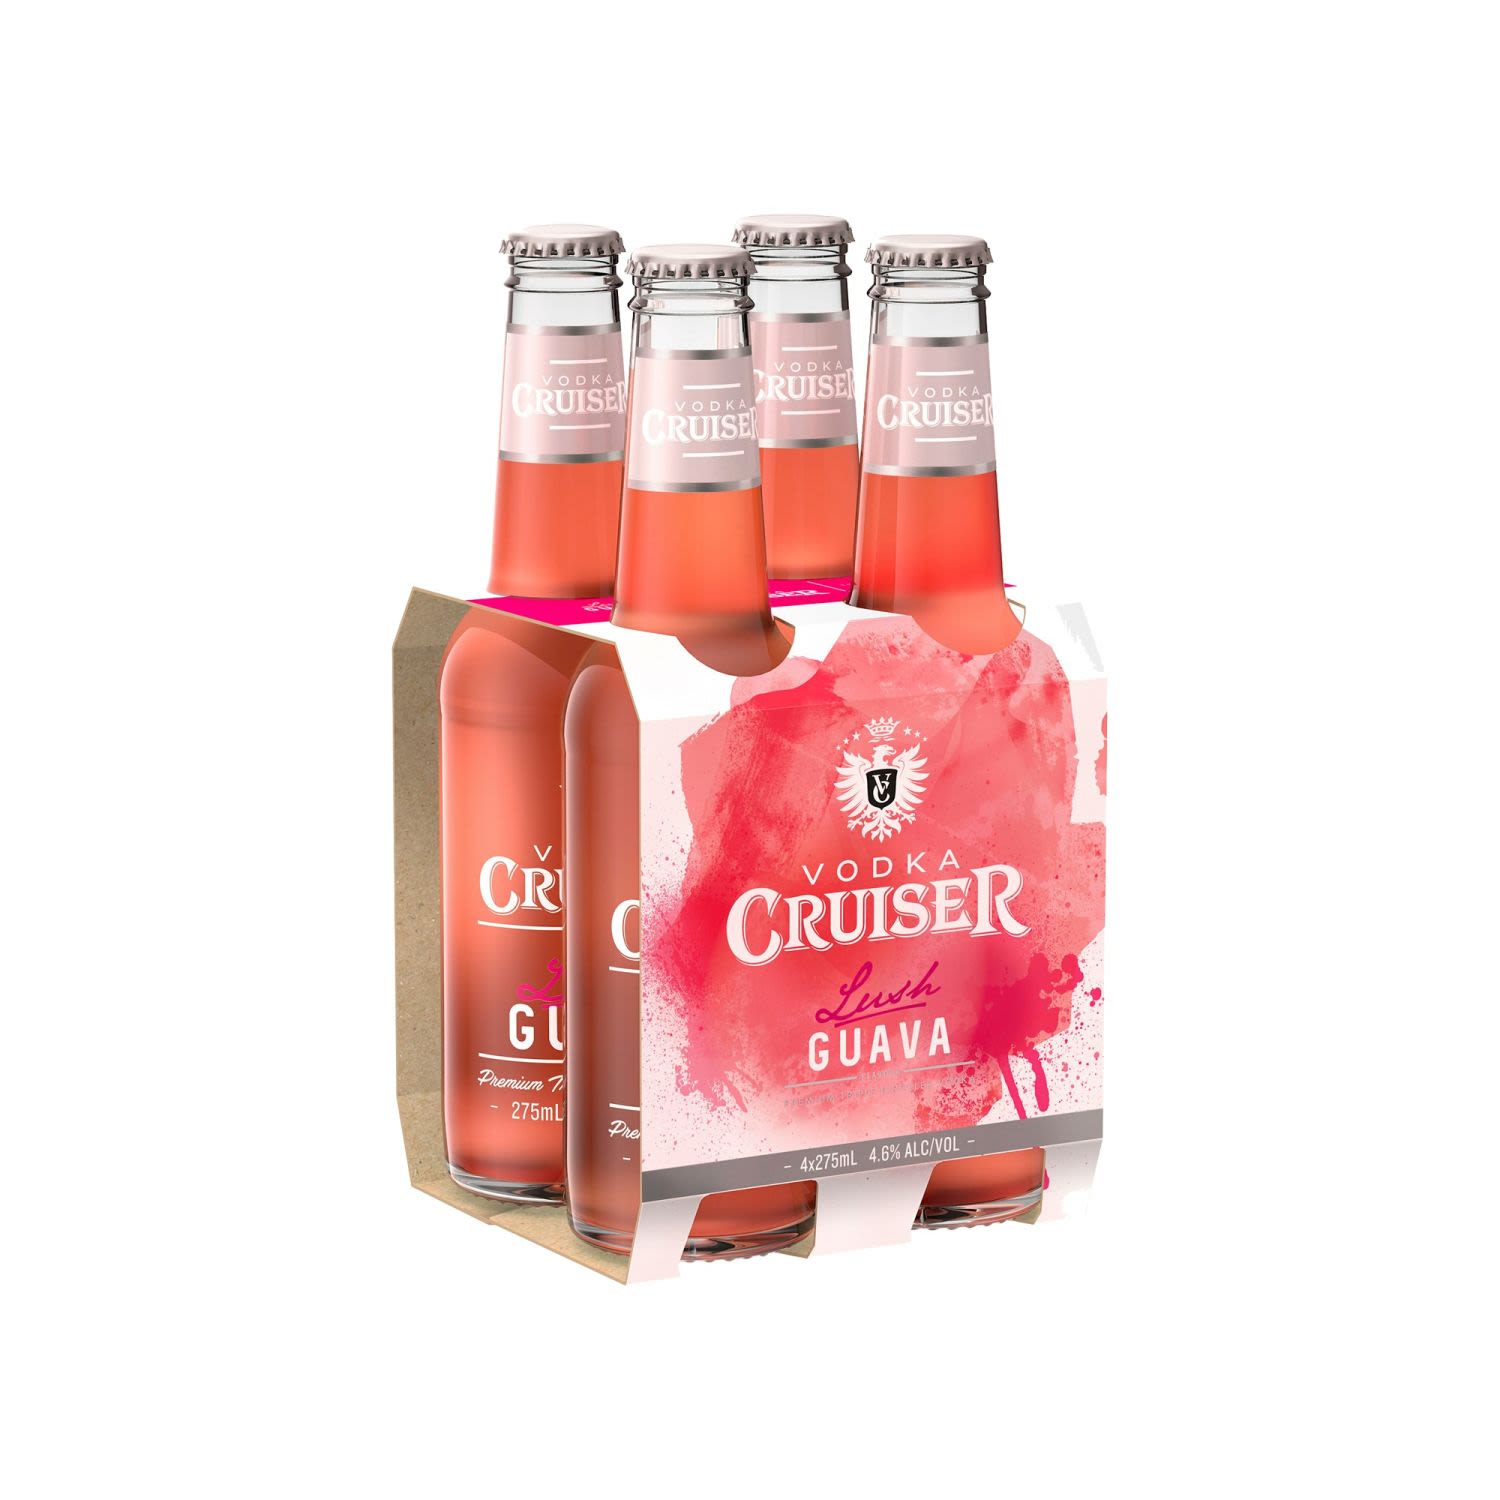 Vodka Cruiser Lush Guava Bottle 275mL 4 Pack